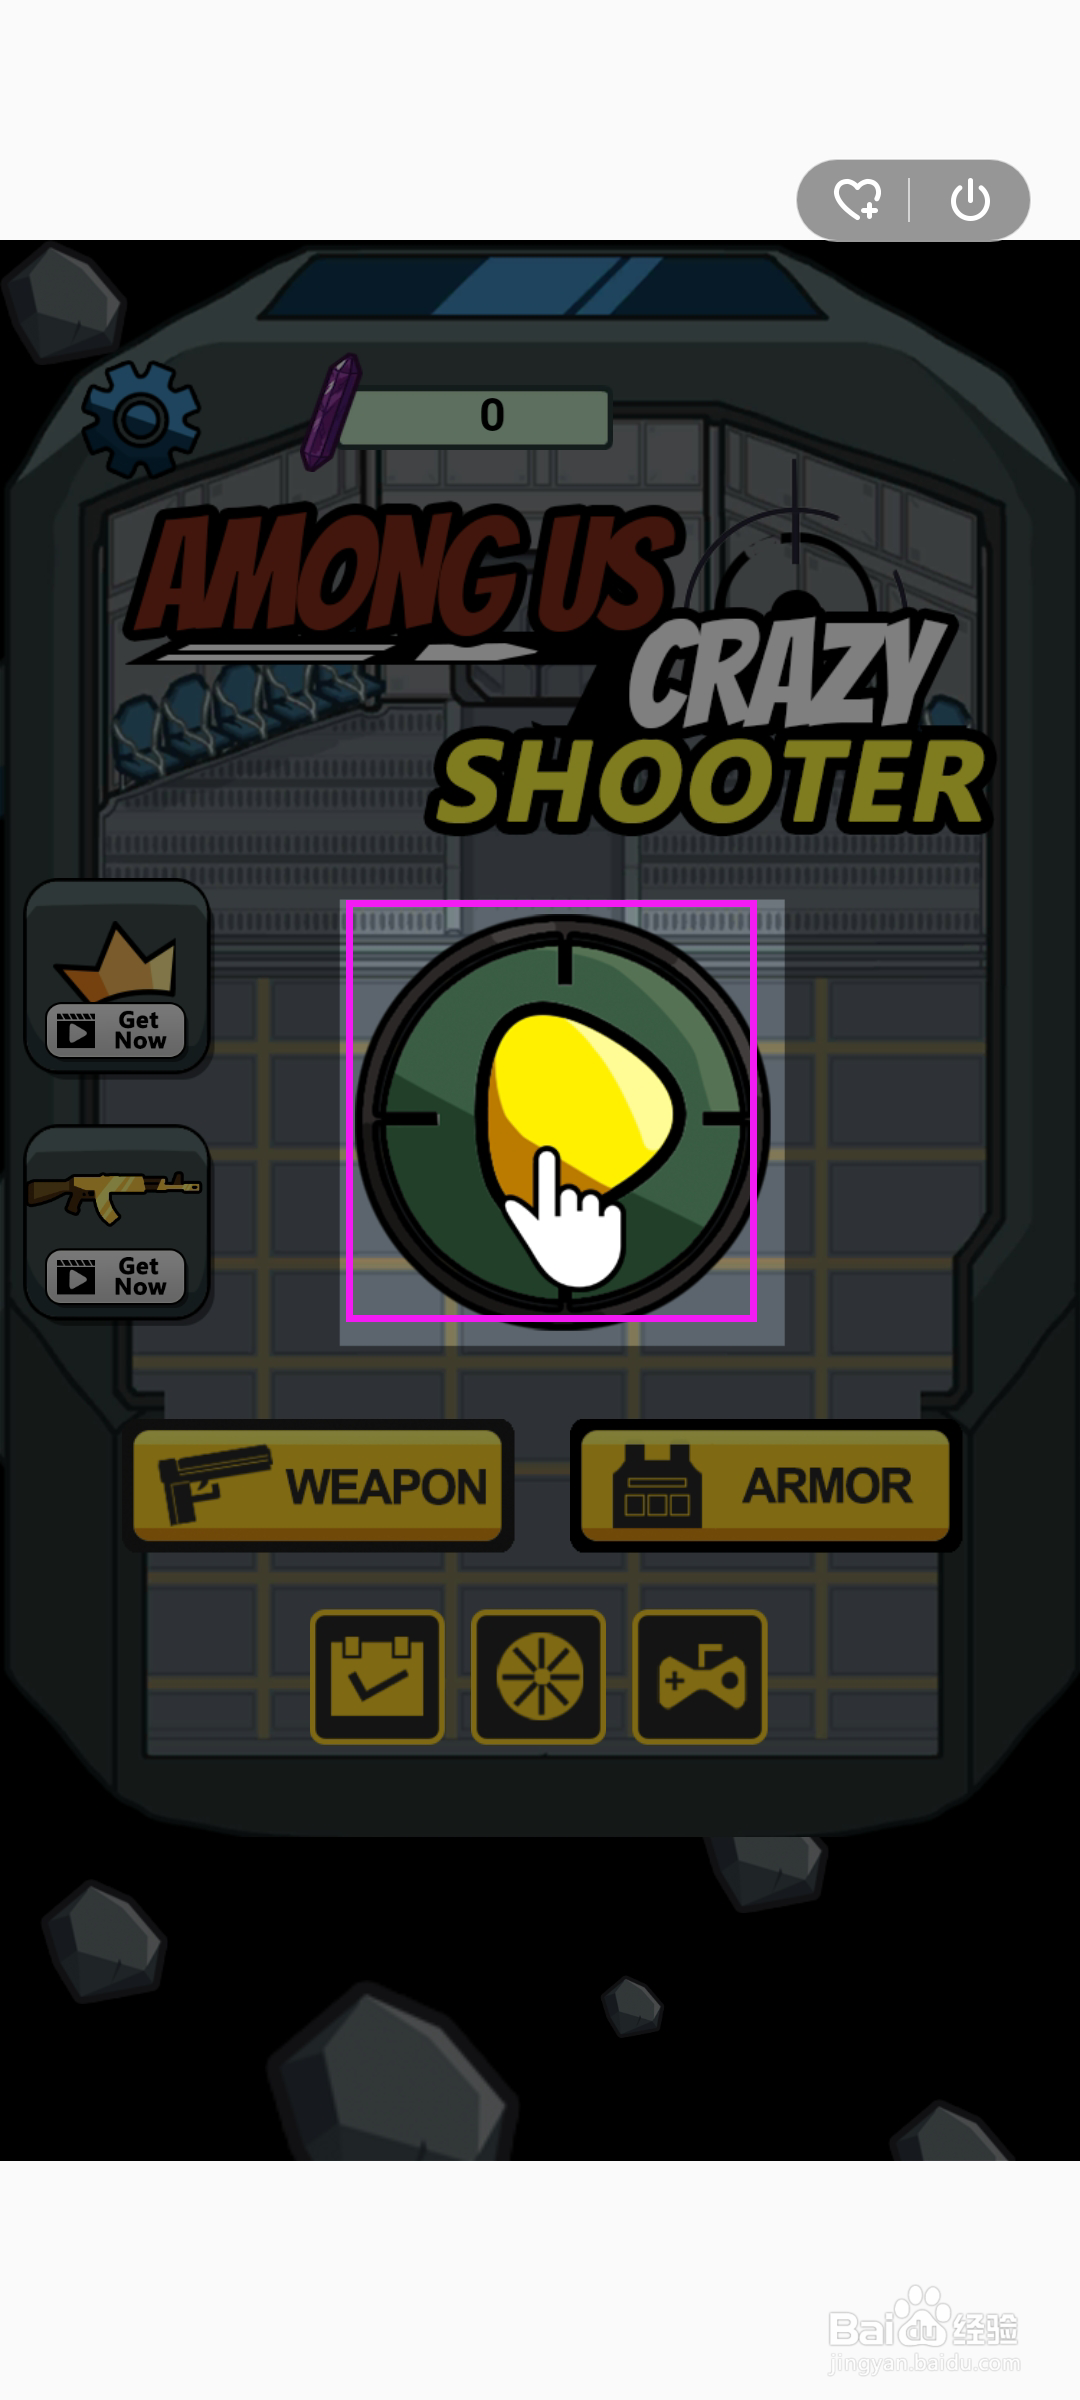 flash bubble shooter